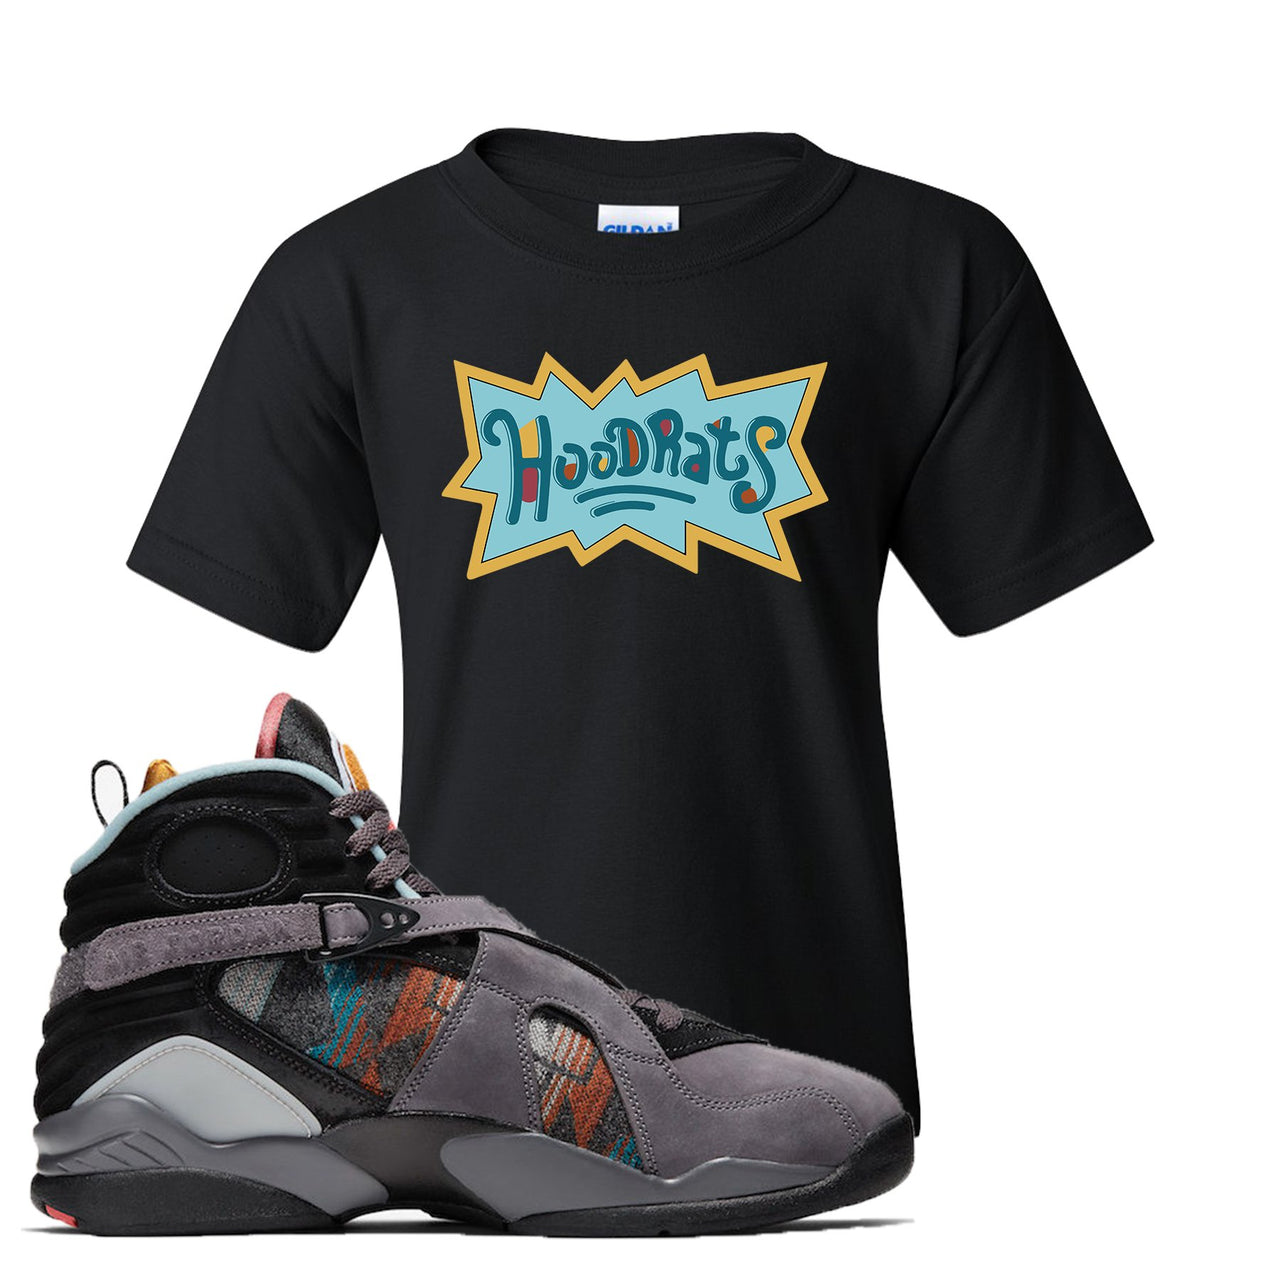 Jordan 8 N7 Pendleton Hood Rats Black Sneaker Hook Up Kid's T-Shirt